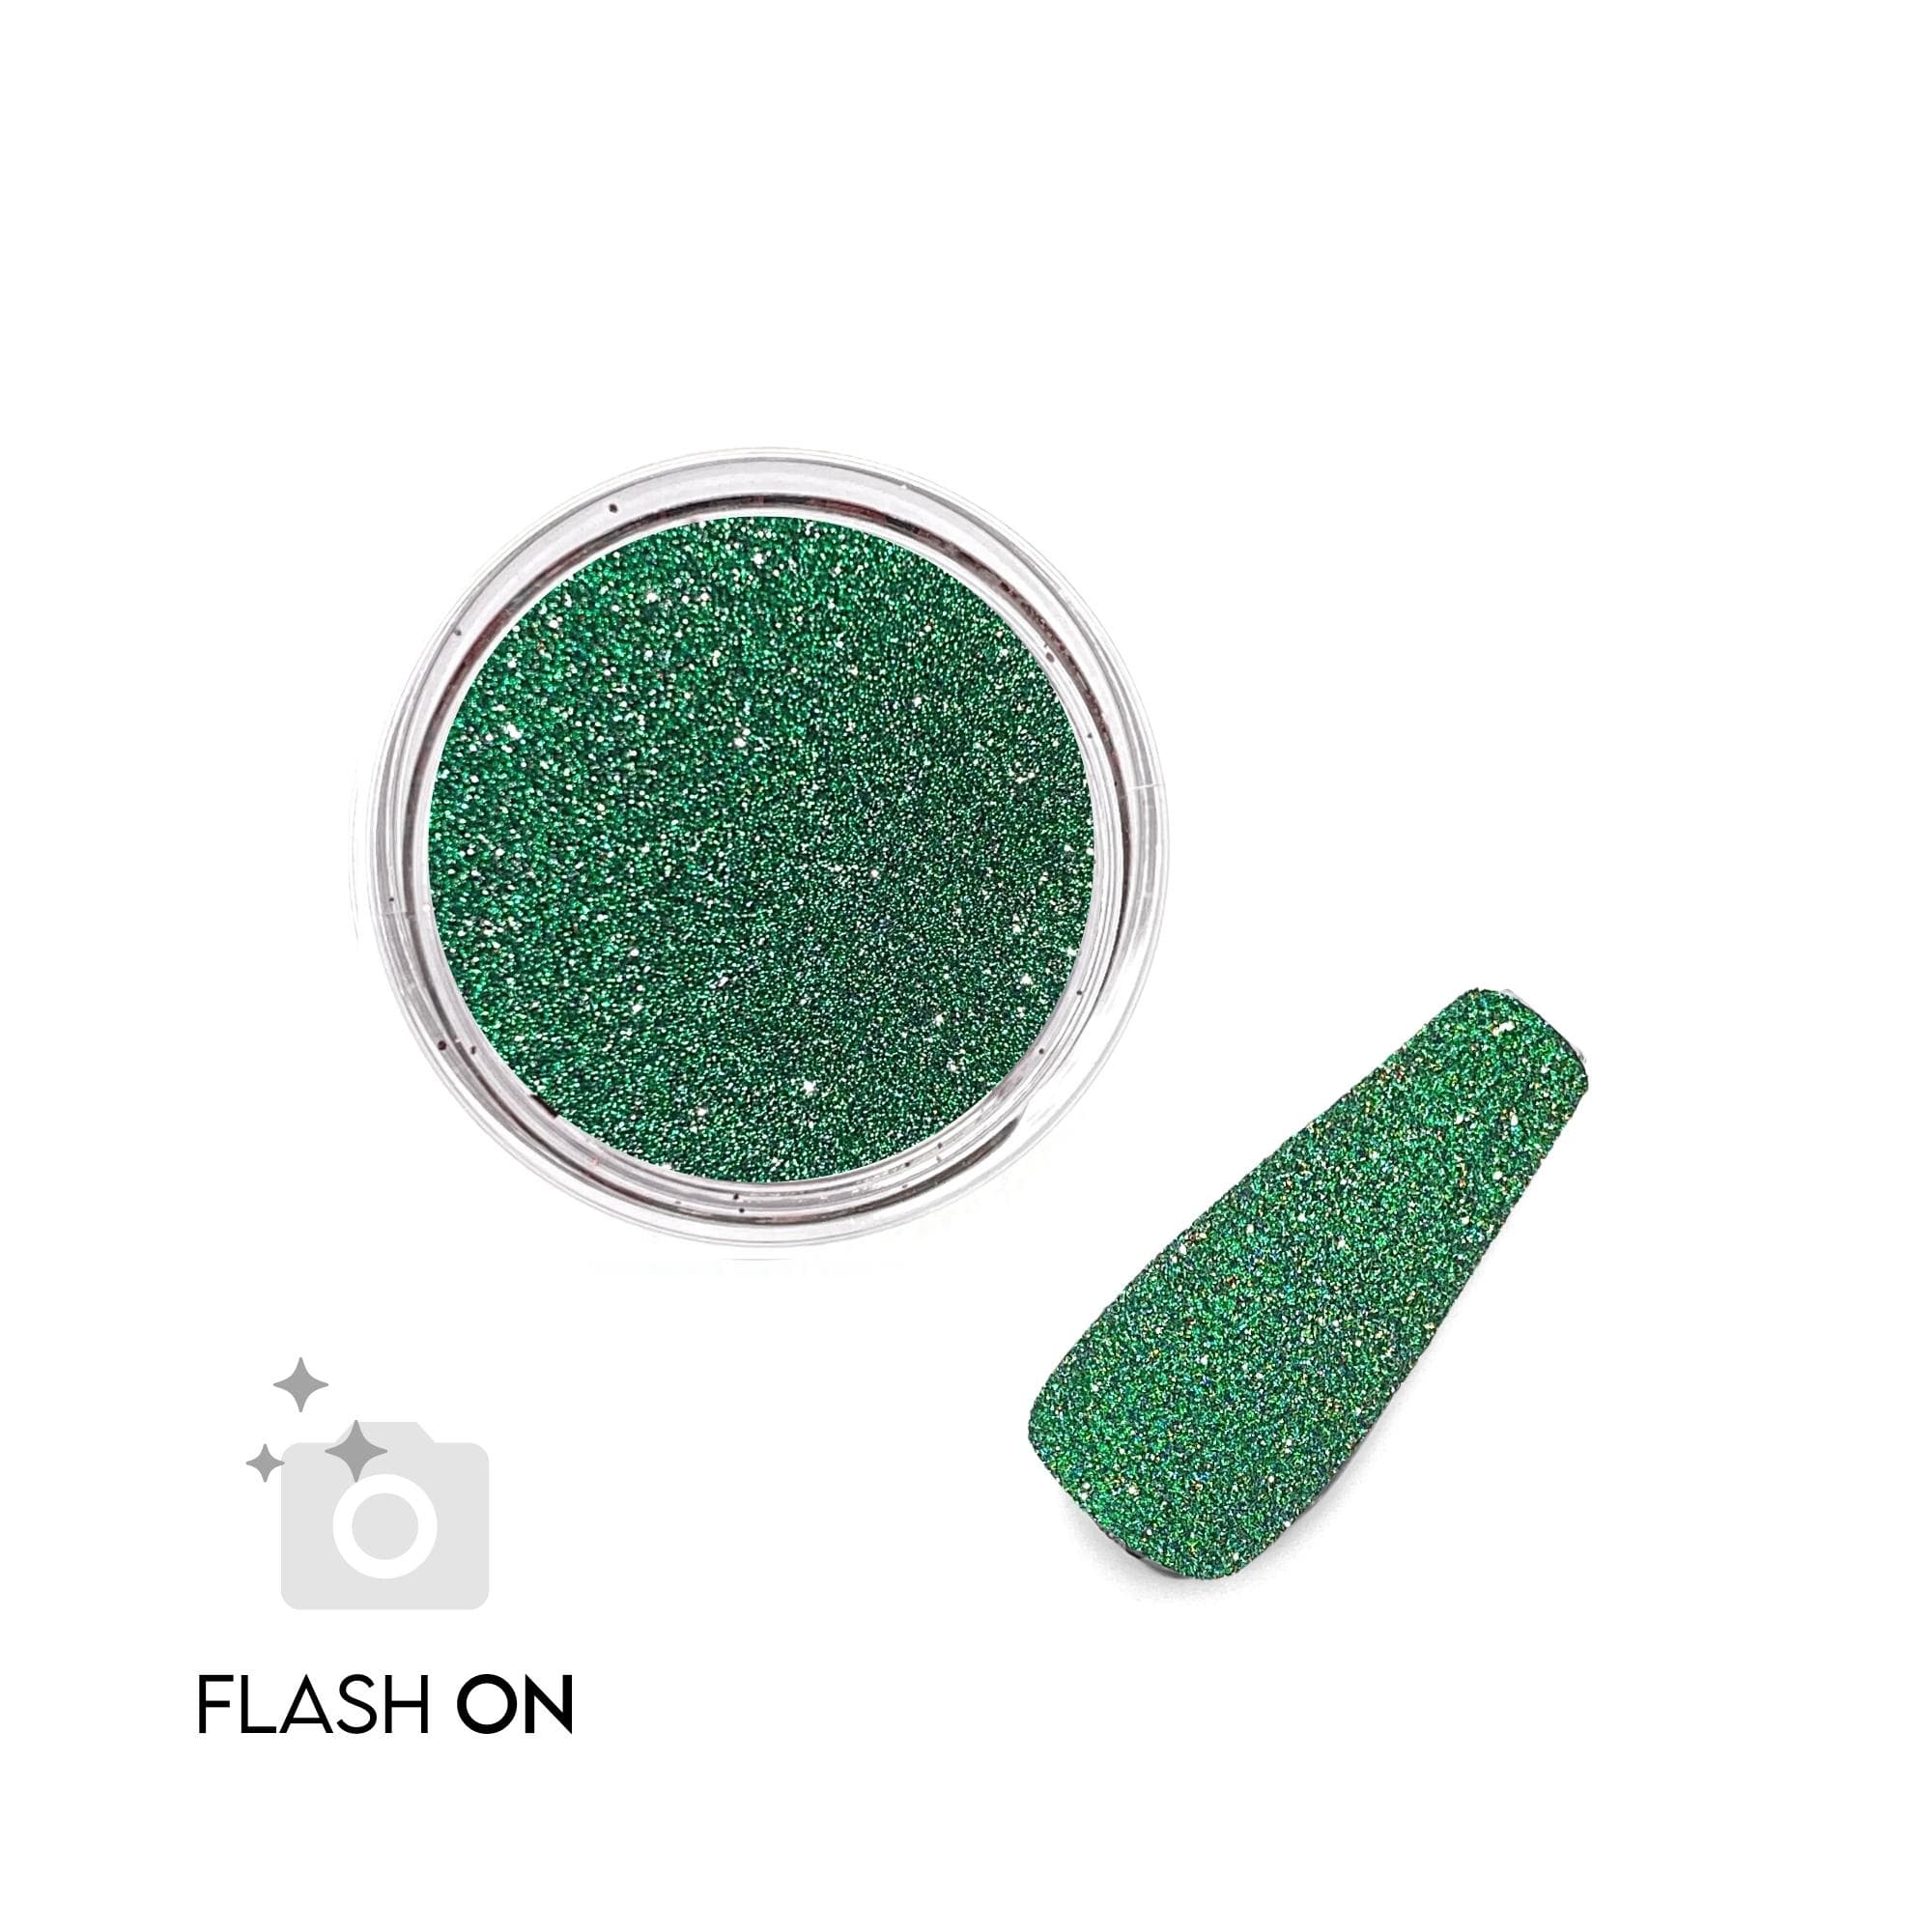 Luxapolish Flash Glitz - Emerald